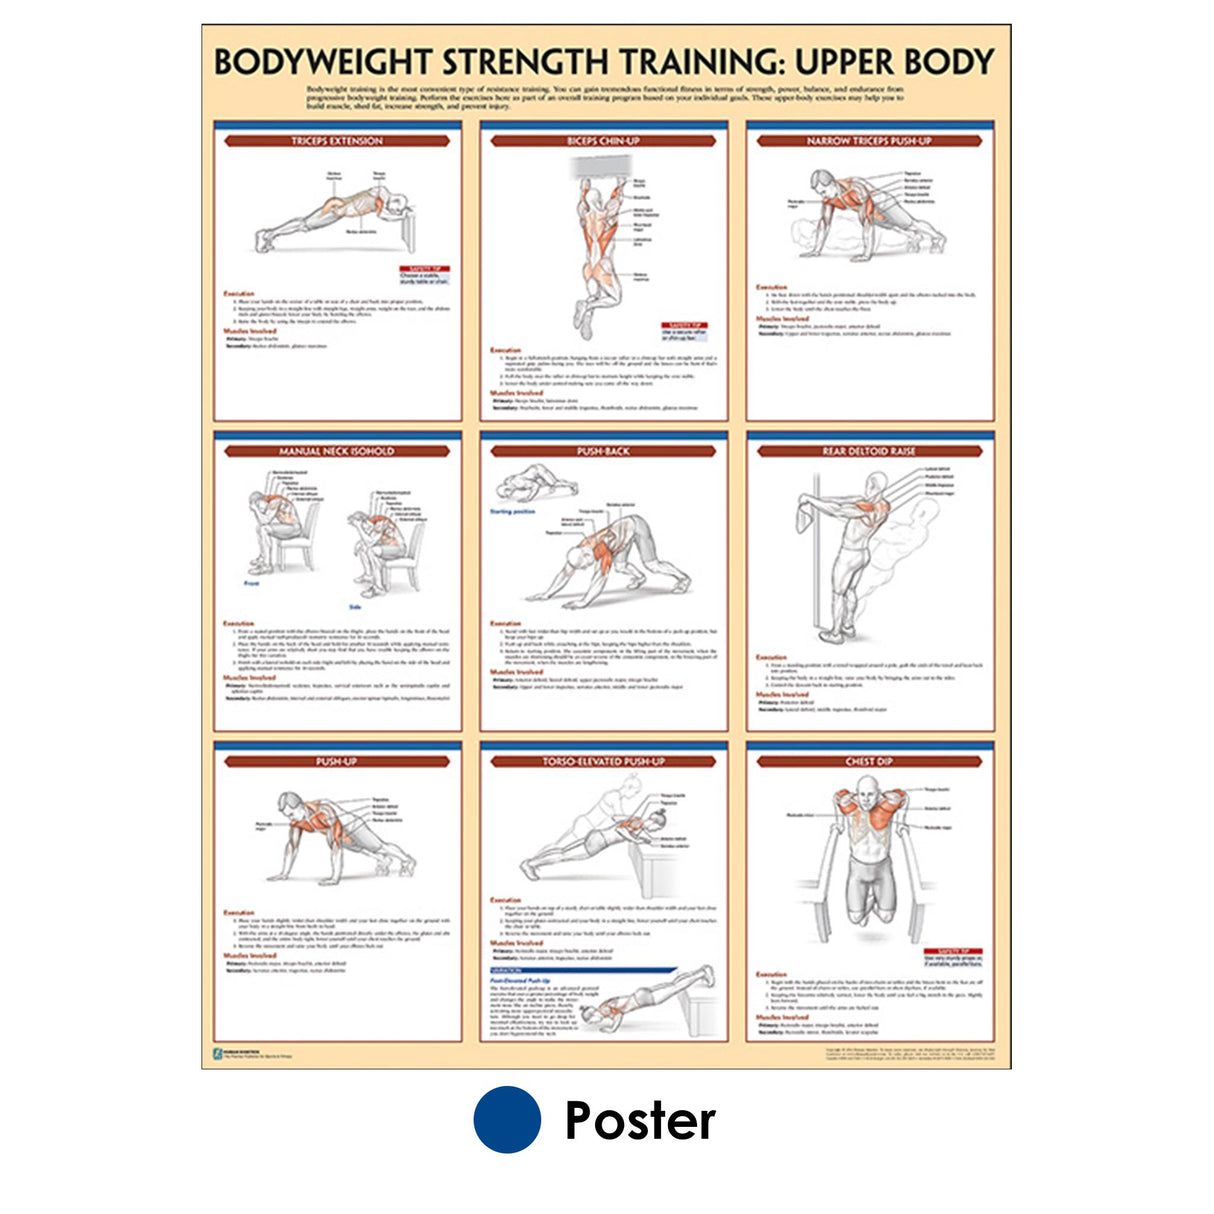 Bodyweight Strength Training Poster: Upper Body